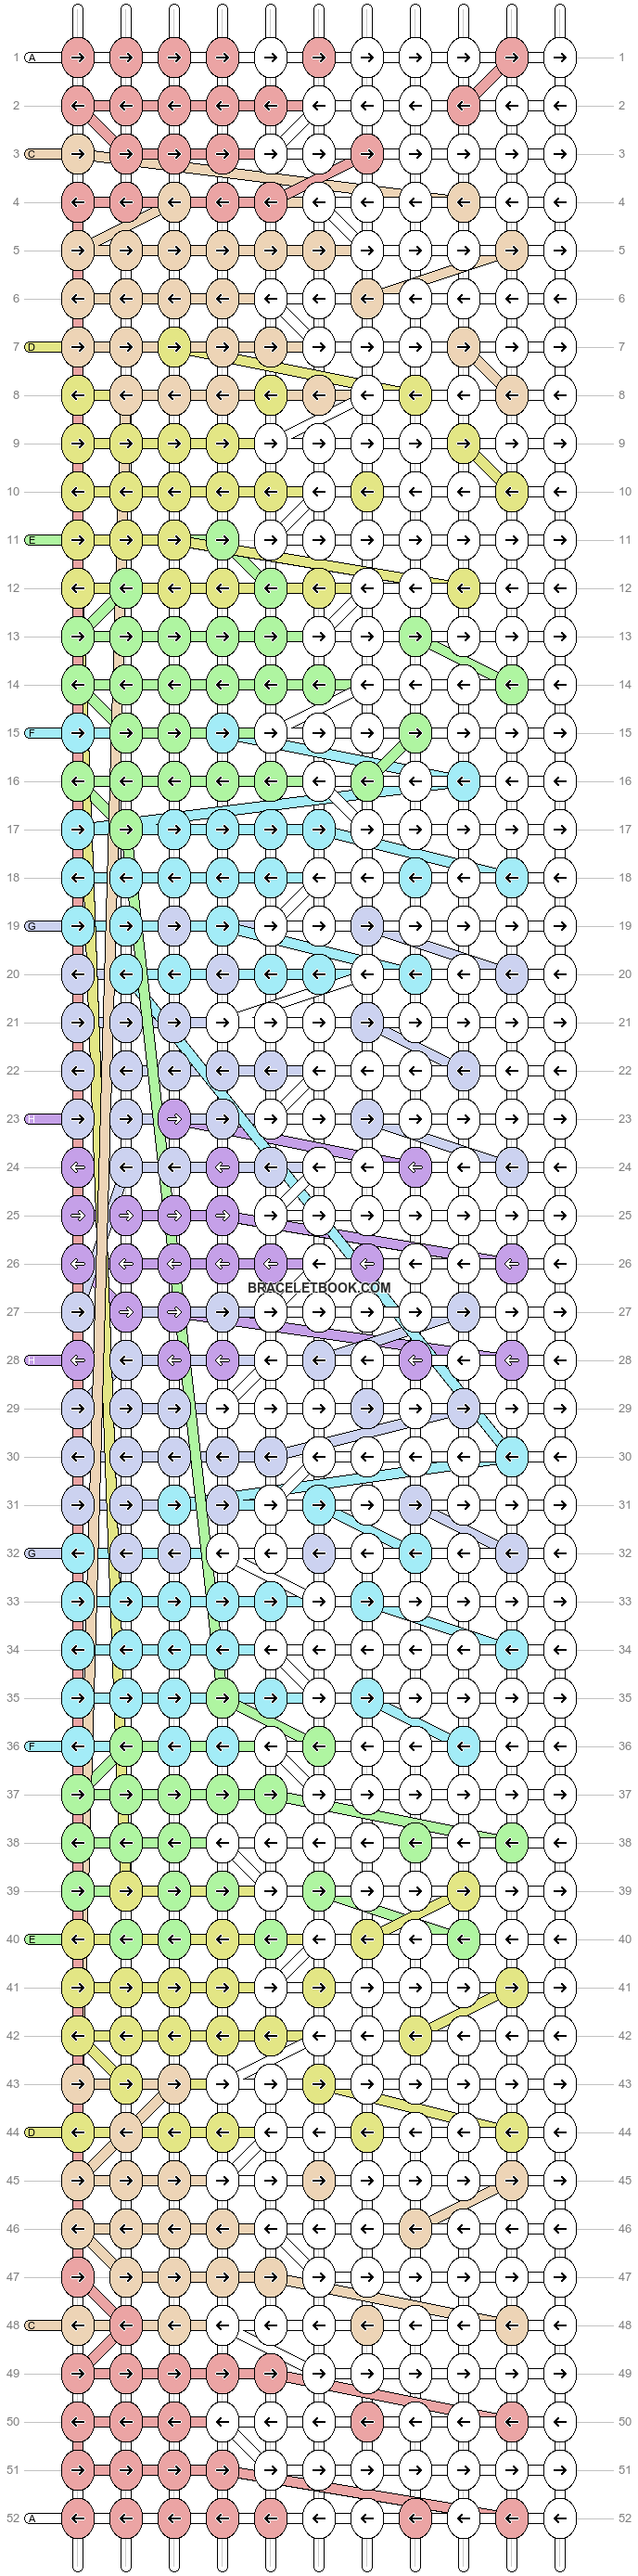 Alpha pattern #48805 variation #76426 pattern